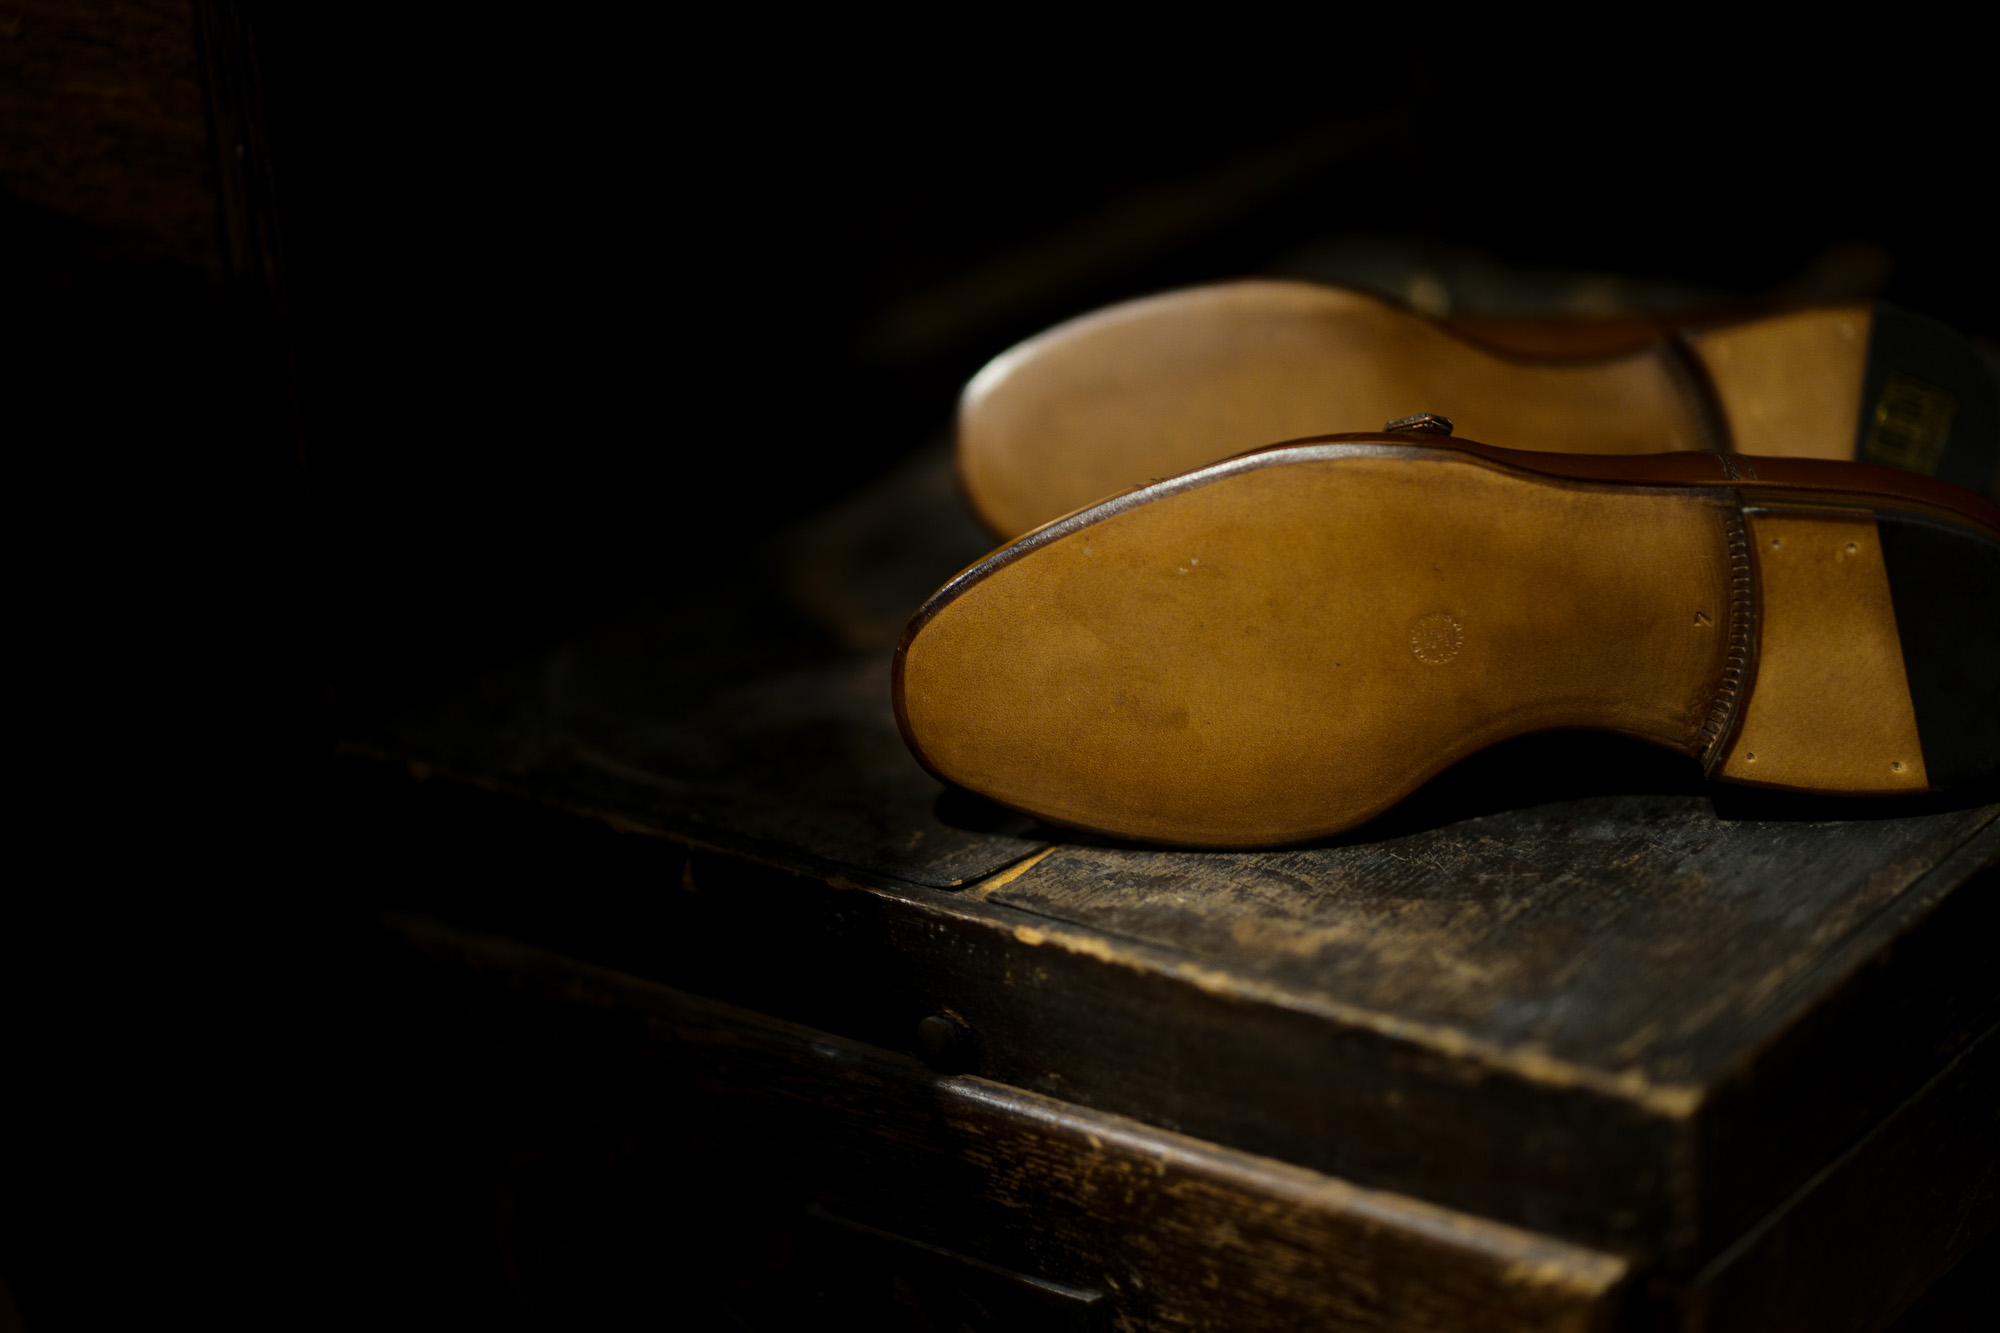 ENZO BONAFE (エンツォボナフェ) ART.EB-27 Double Monk Strap Shoes Horween Shell Cordovan Leather ホーウィン社シェルコードバンレザー ダブルモンクストラップシューズ BOURBON (バーボン) made in italy (イタリア製) 2020 愛知 名古屋 Alto e Diritto アルトエデリット